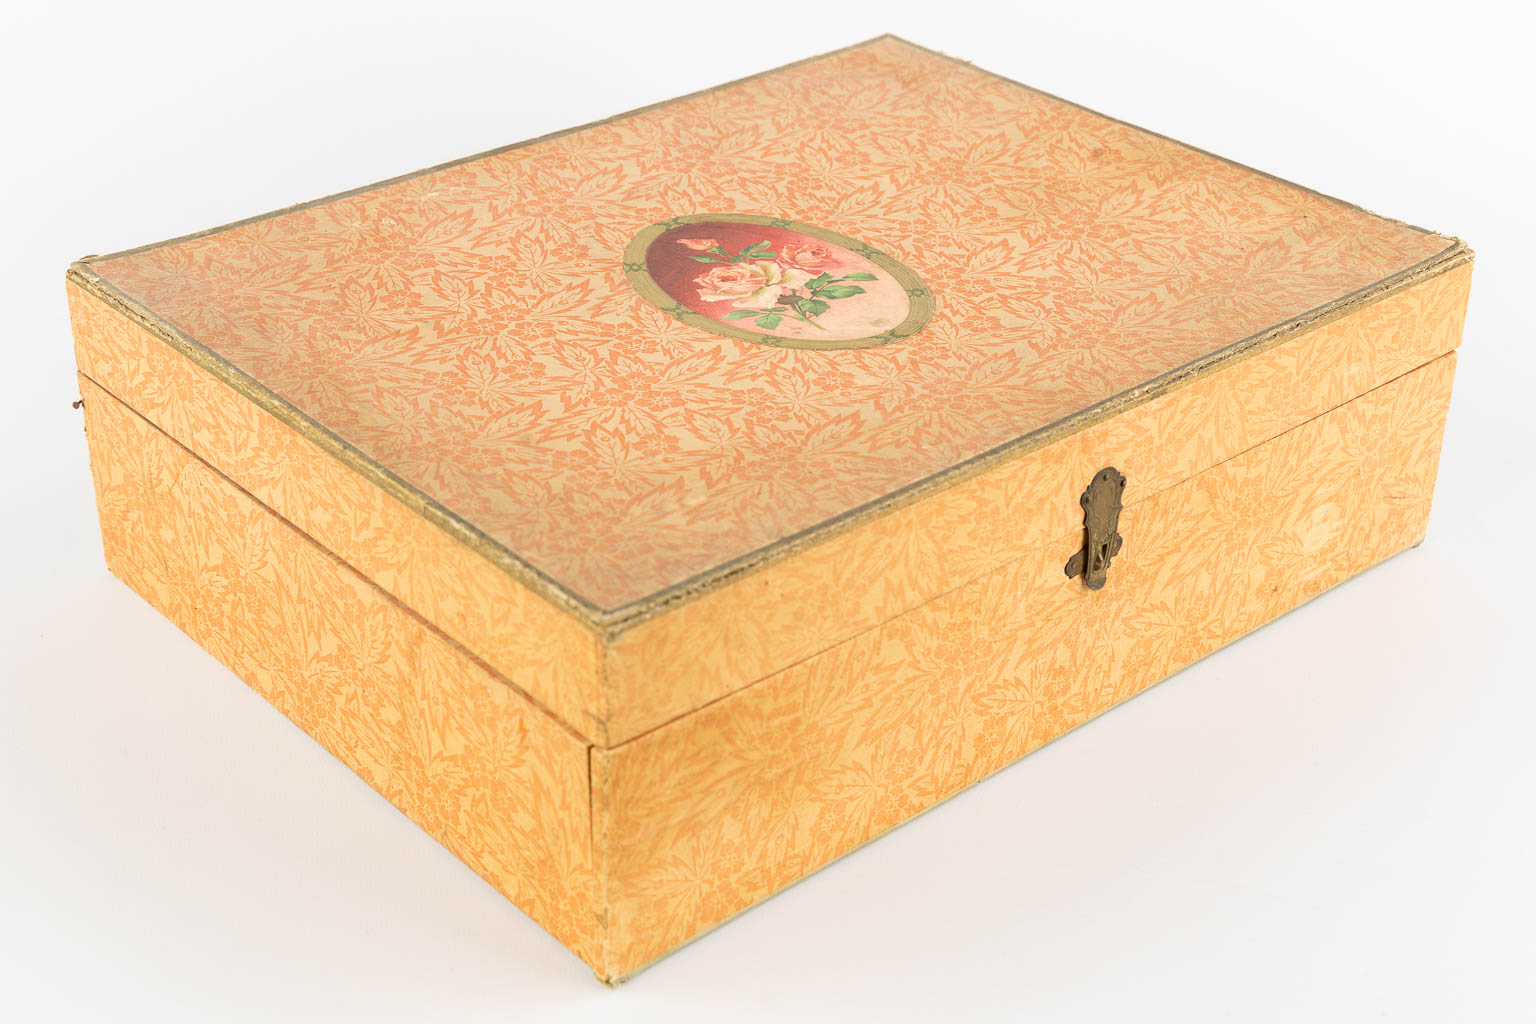 A children's porcelain service and flatware, 'Dinette', in the original box. (L:28 x W:36 x H:12 cm) - Image 10 of 10